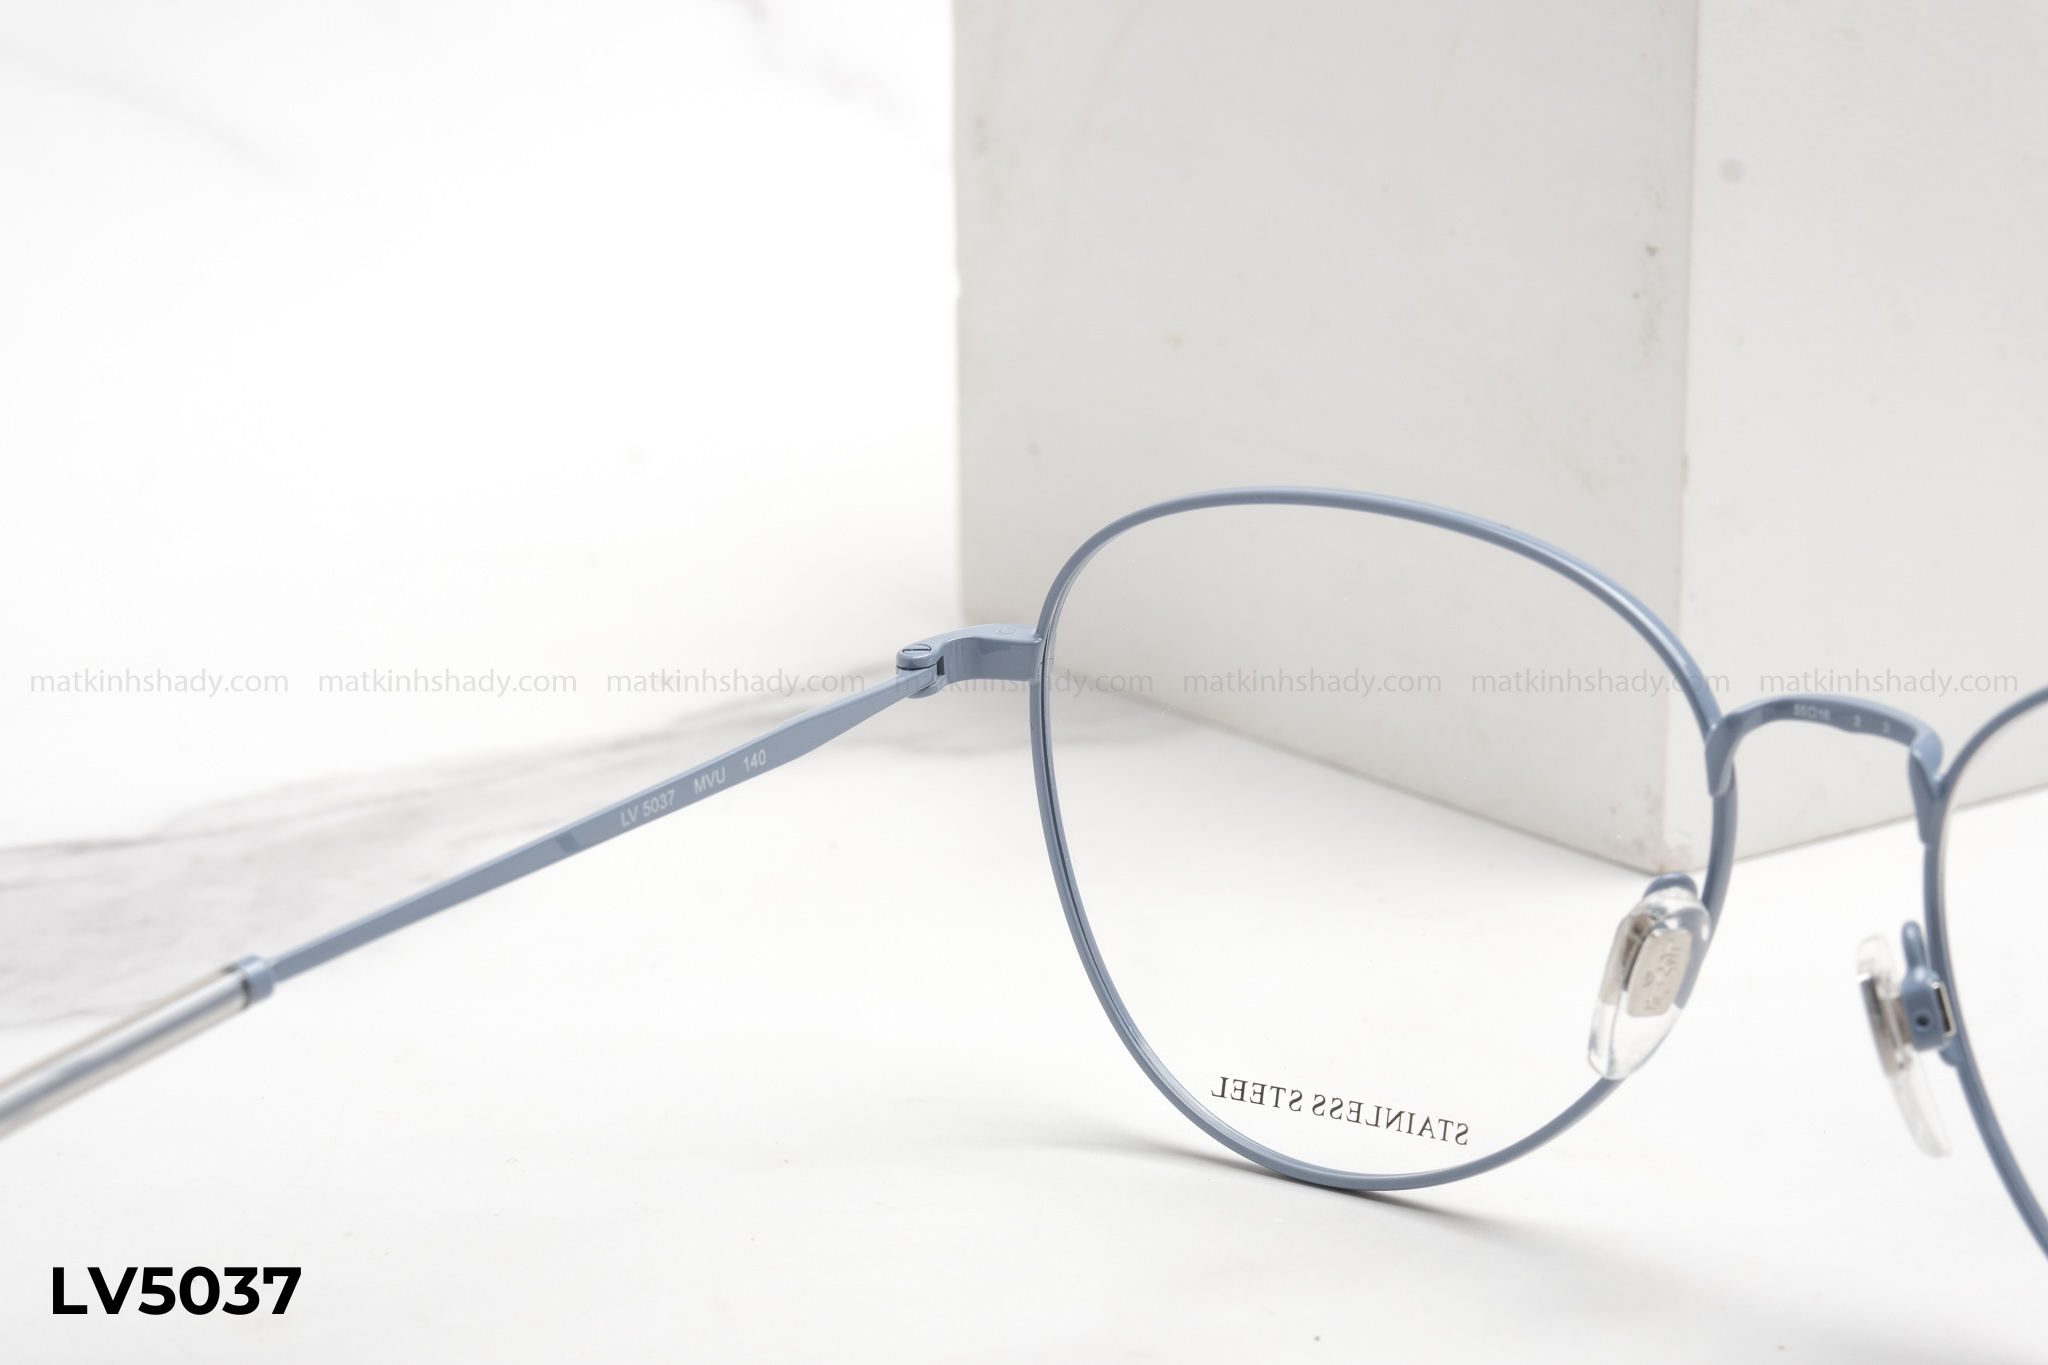  Levi's Eyewear - Glasses - LV5037 